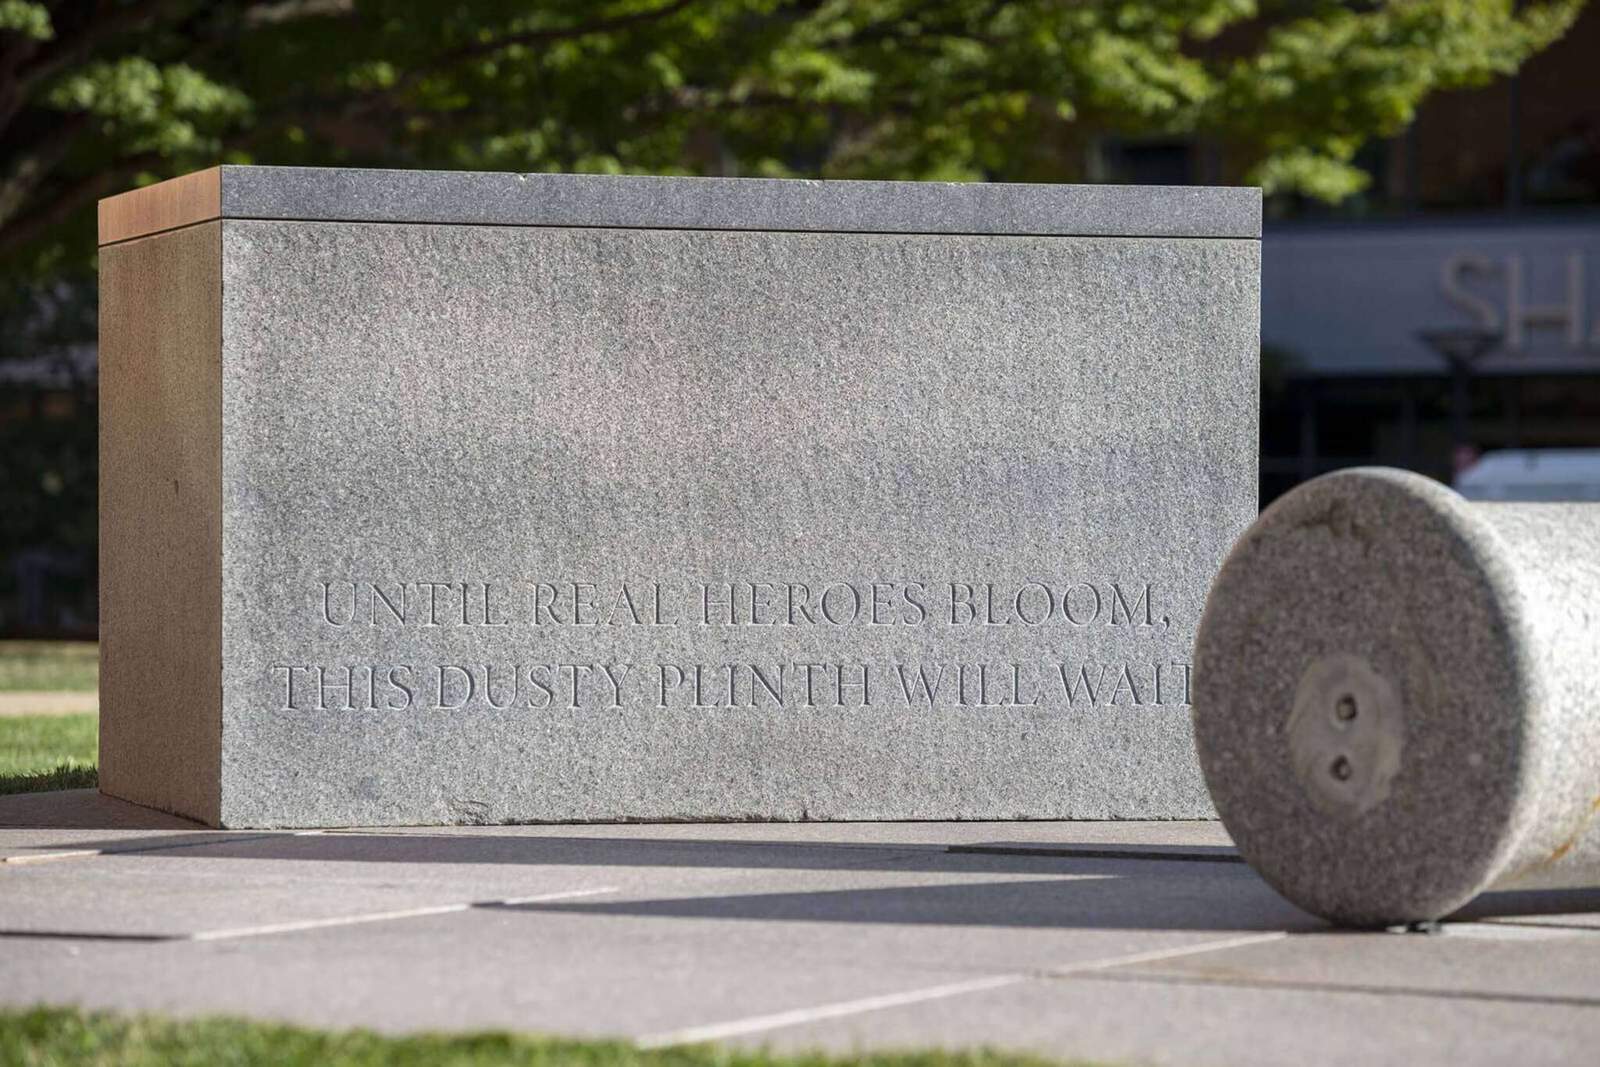 Theaster Gates participates in The Monument We Make symposium at Drexel in Philadelphia